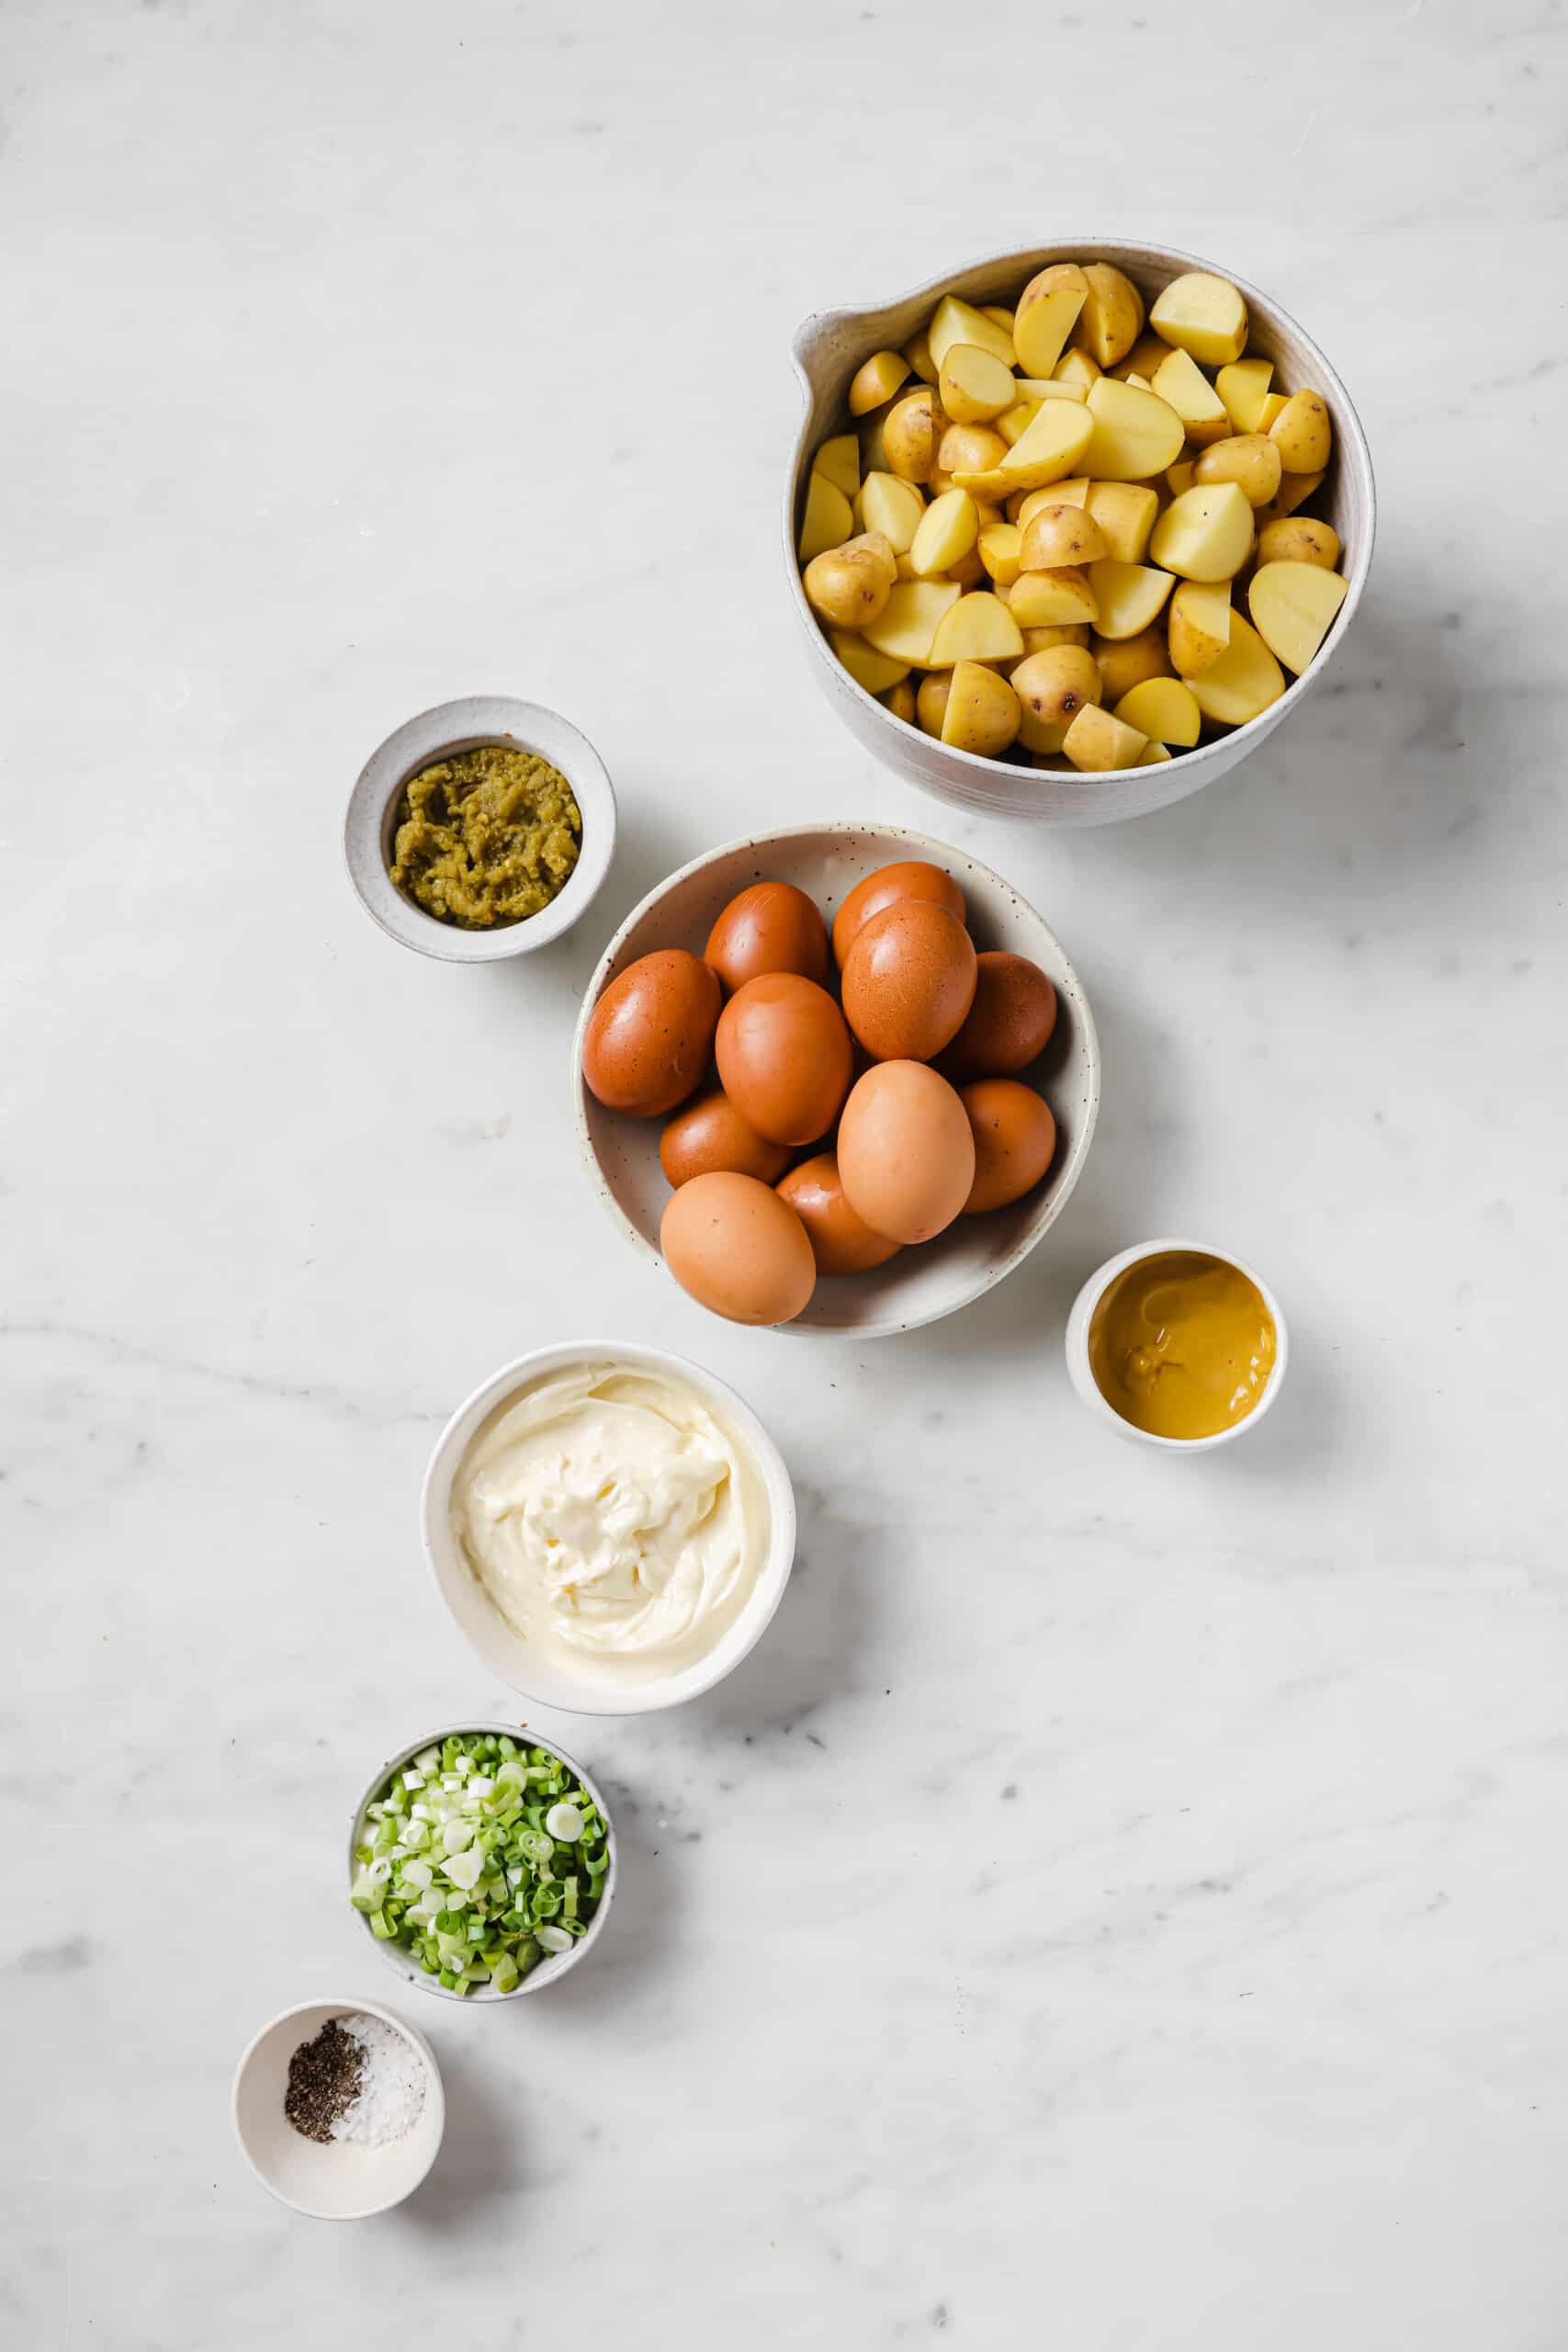 Ingredients for egg potato salad. 